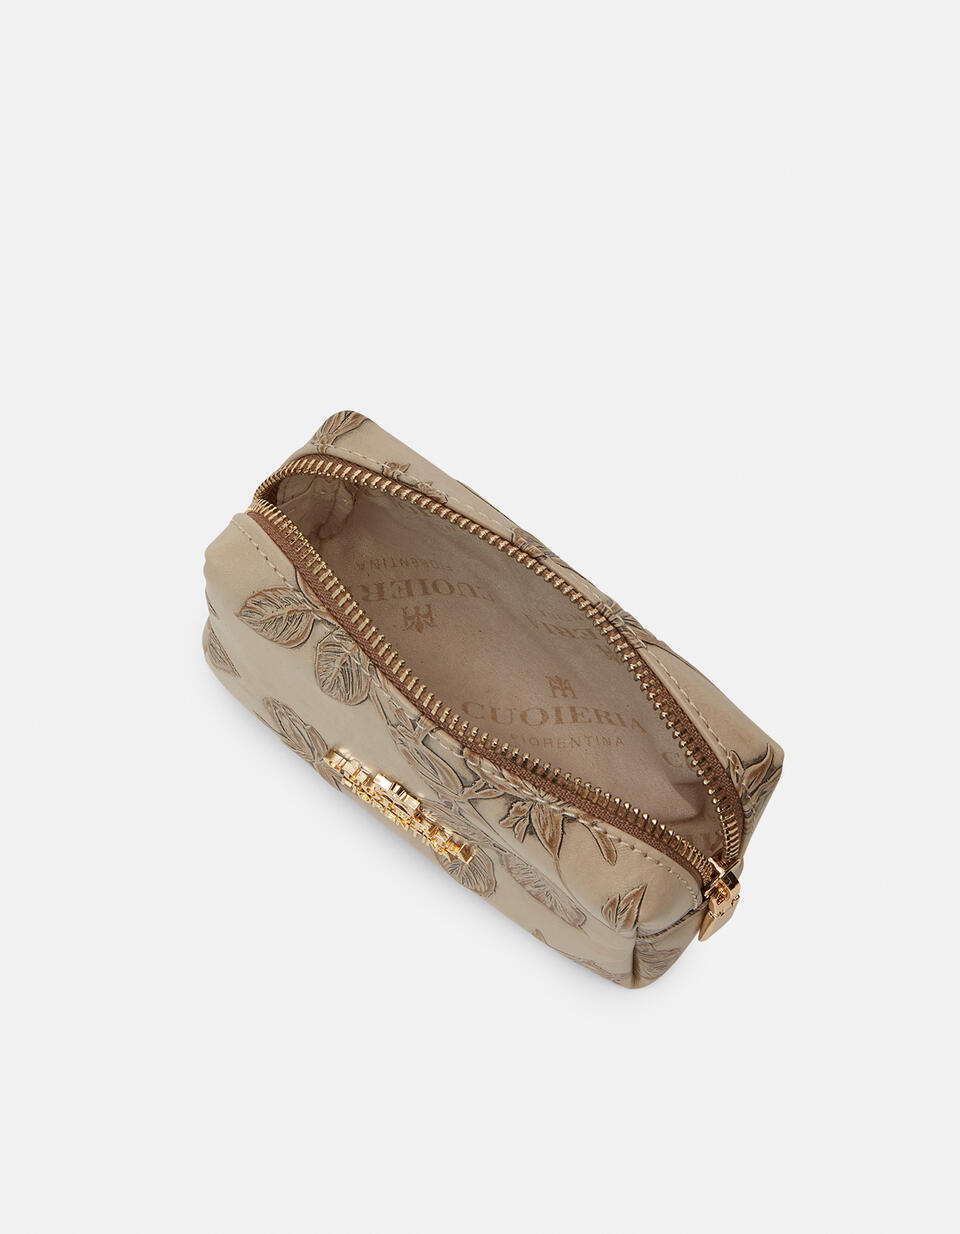 Calfskin printed Beauty-Case - Make Up Bags - Women's Accessories | Accessories Mimì TAUPE - Make Up Bags - Women's Accessories | AccessoriesCuoieria Fiorentina